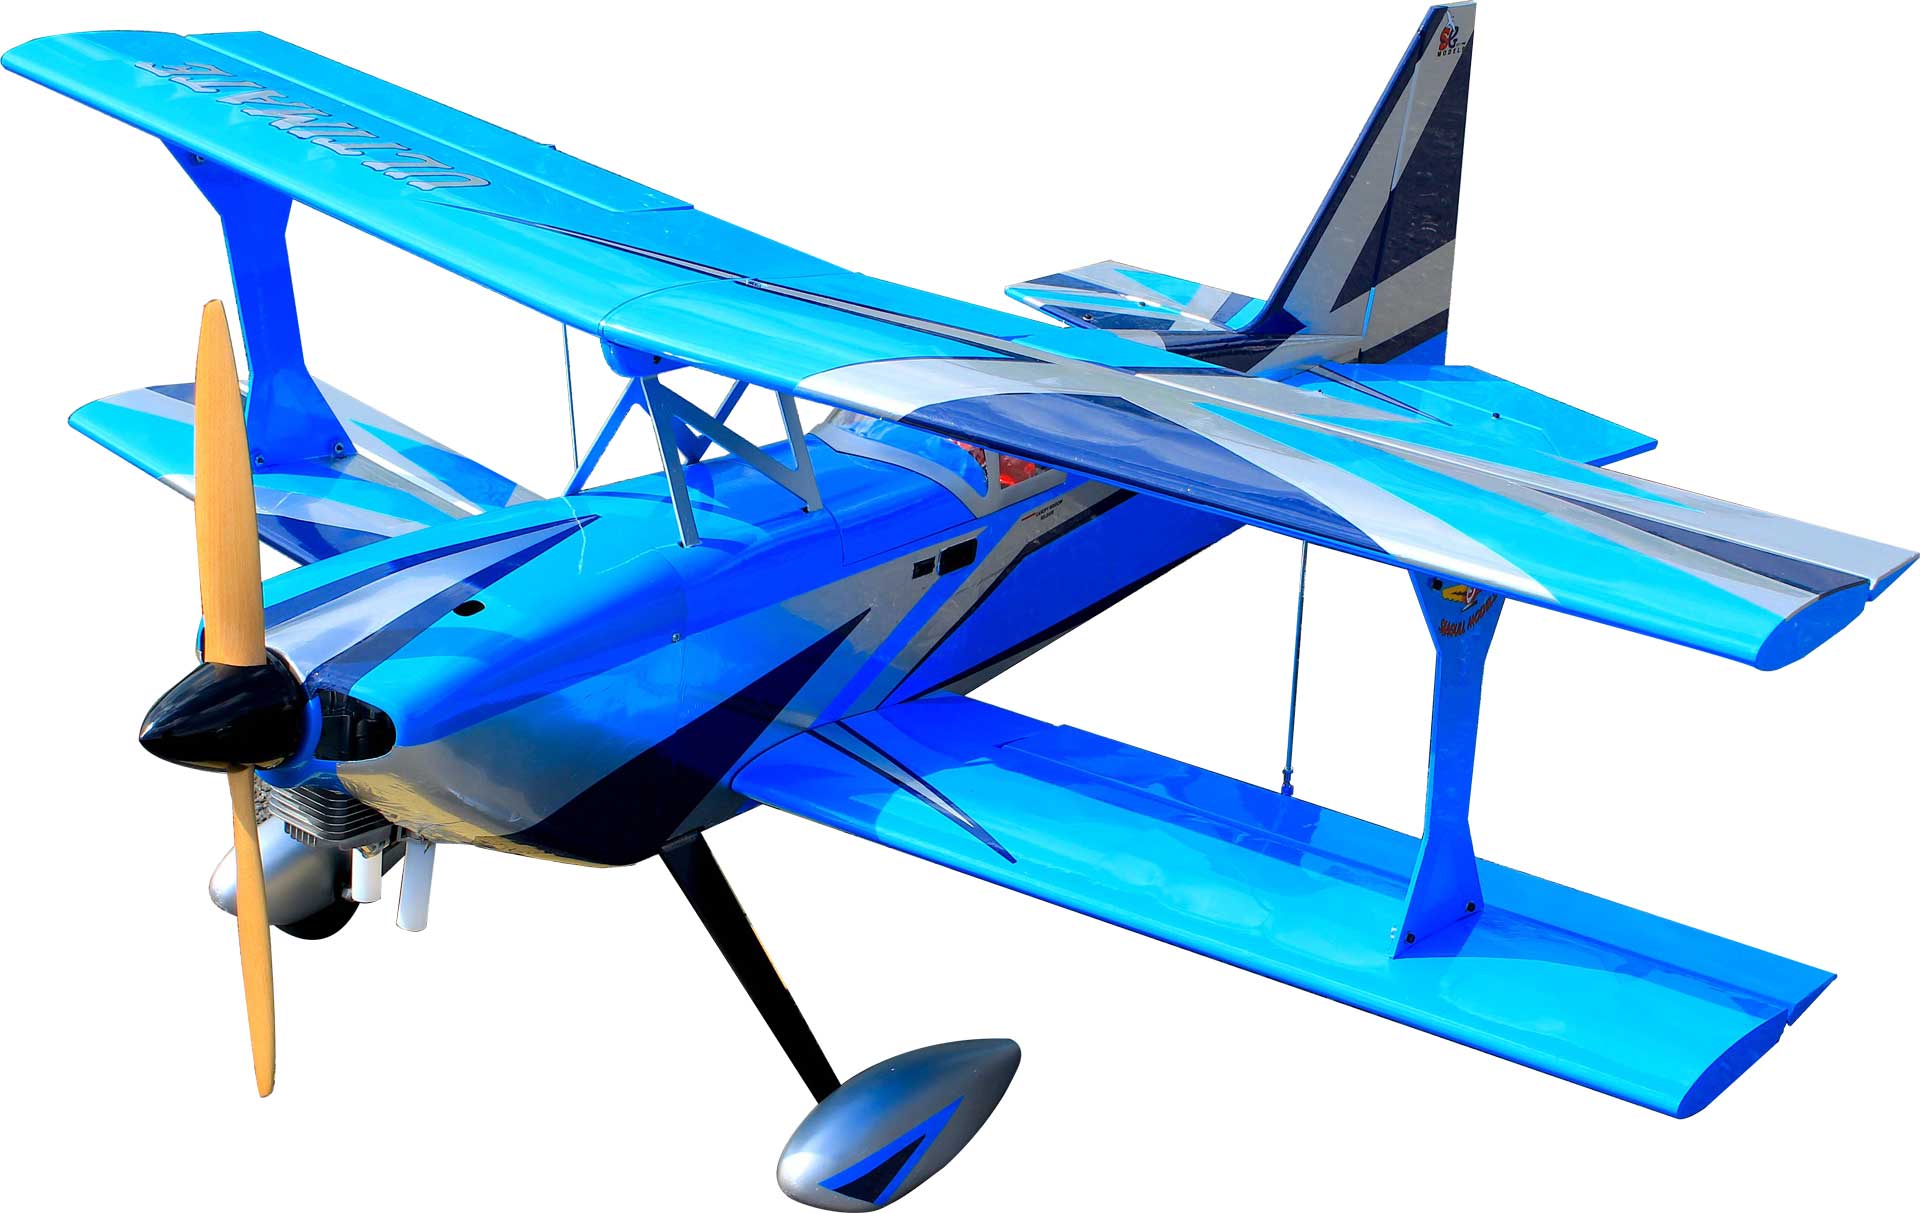 Seagull Models ( SG-Models ) Ultimate Biplane 54.5" ARF 20cc Doppeldecker Elektro&Verbrennerversion